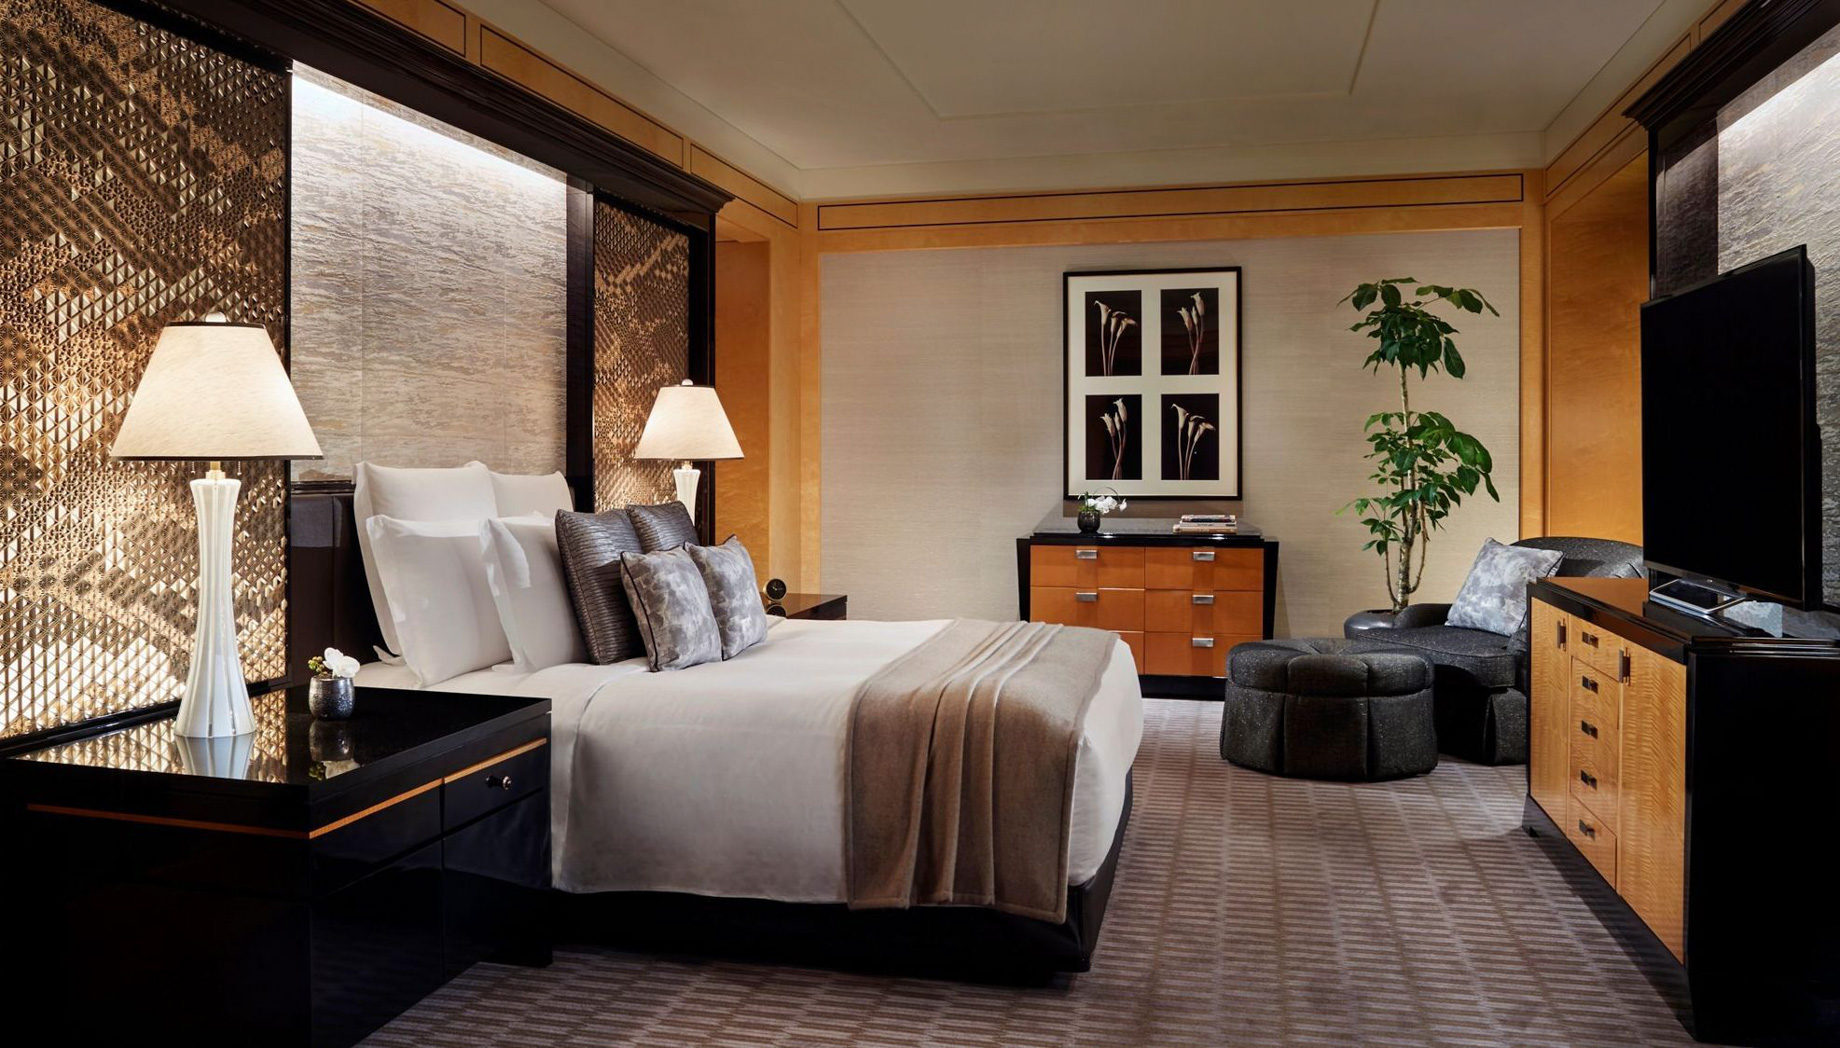 The Ritz-Carlton, Tokyo Hotel - Tokyo, Japan - Presidential Suite Bedroom